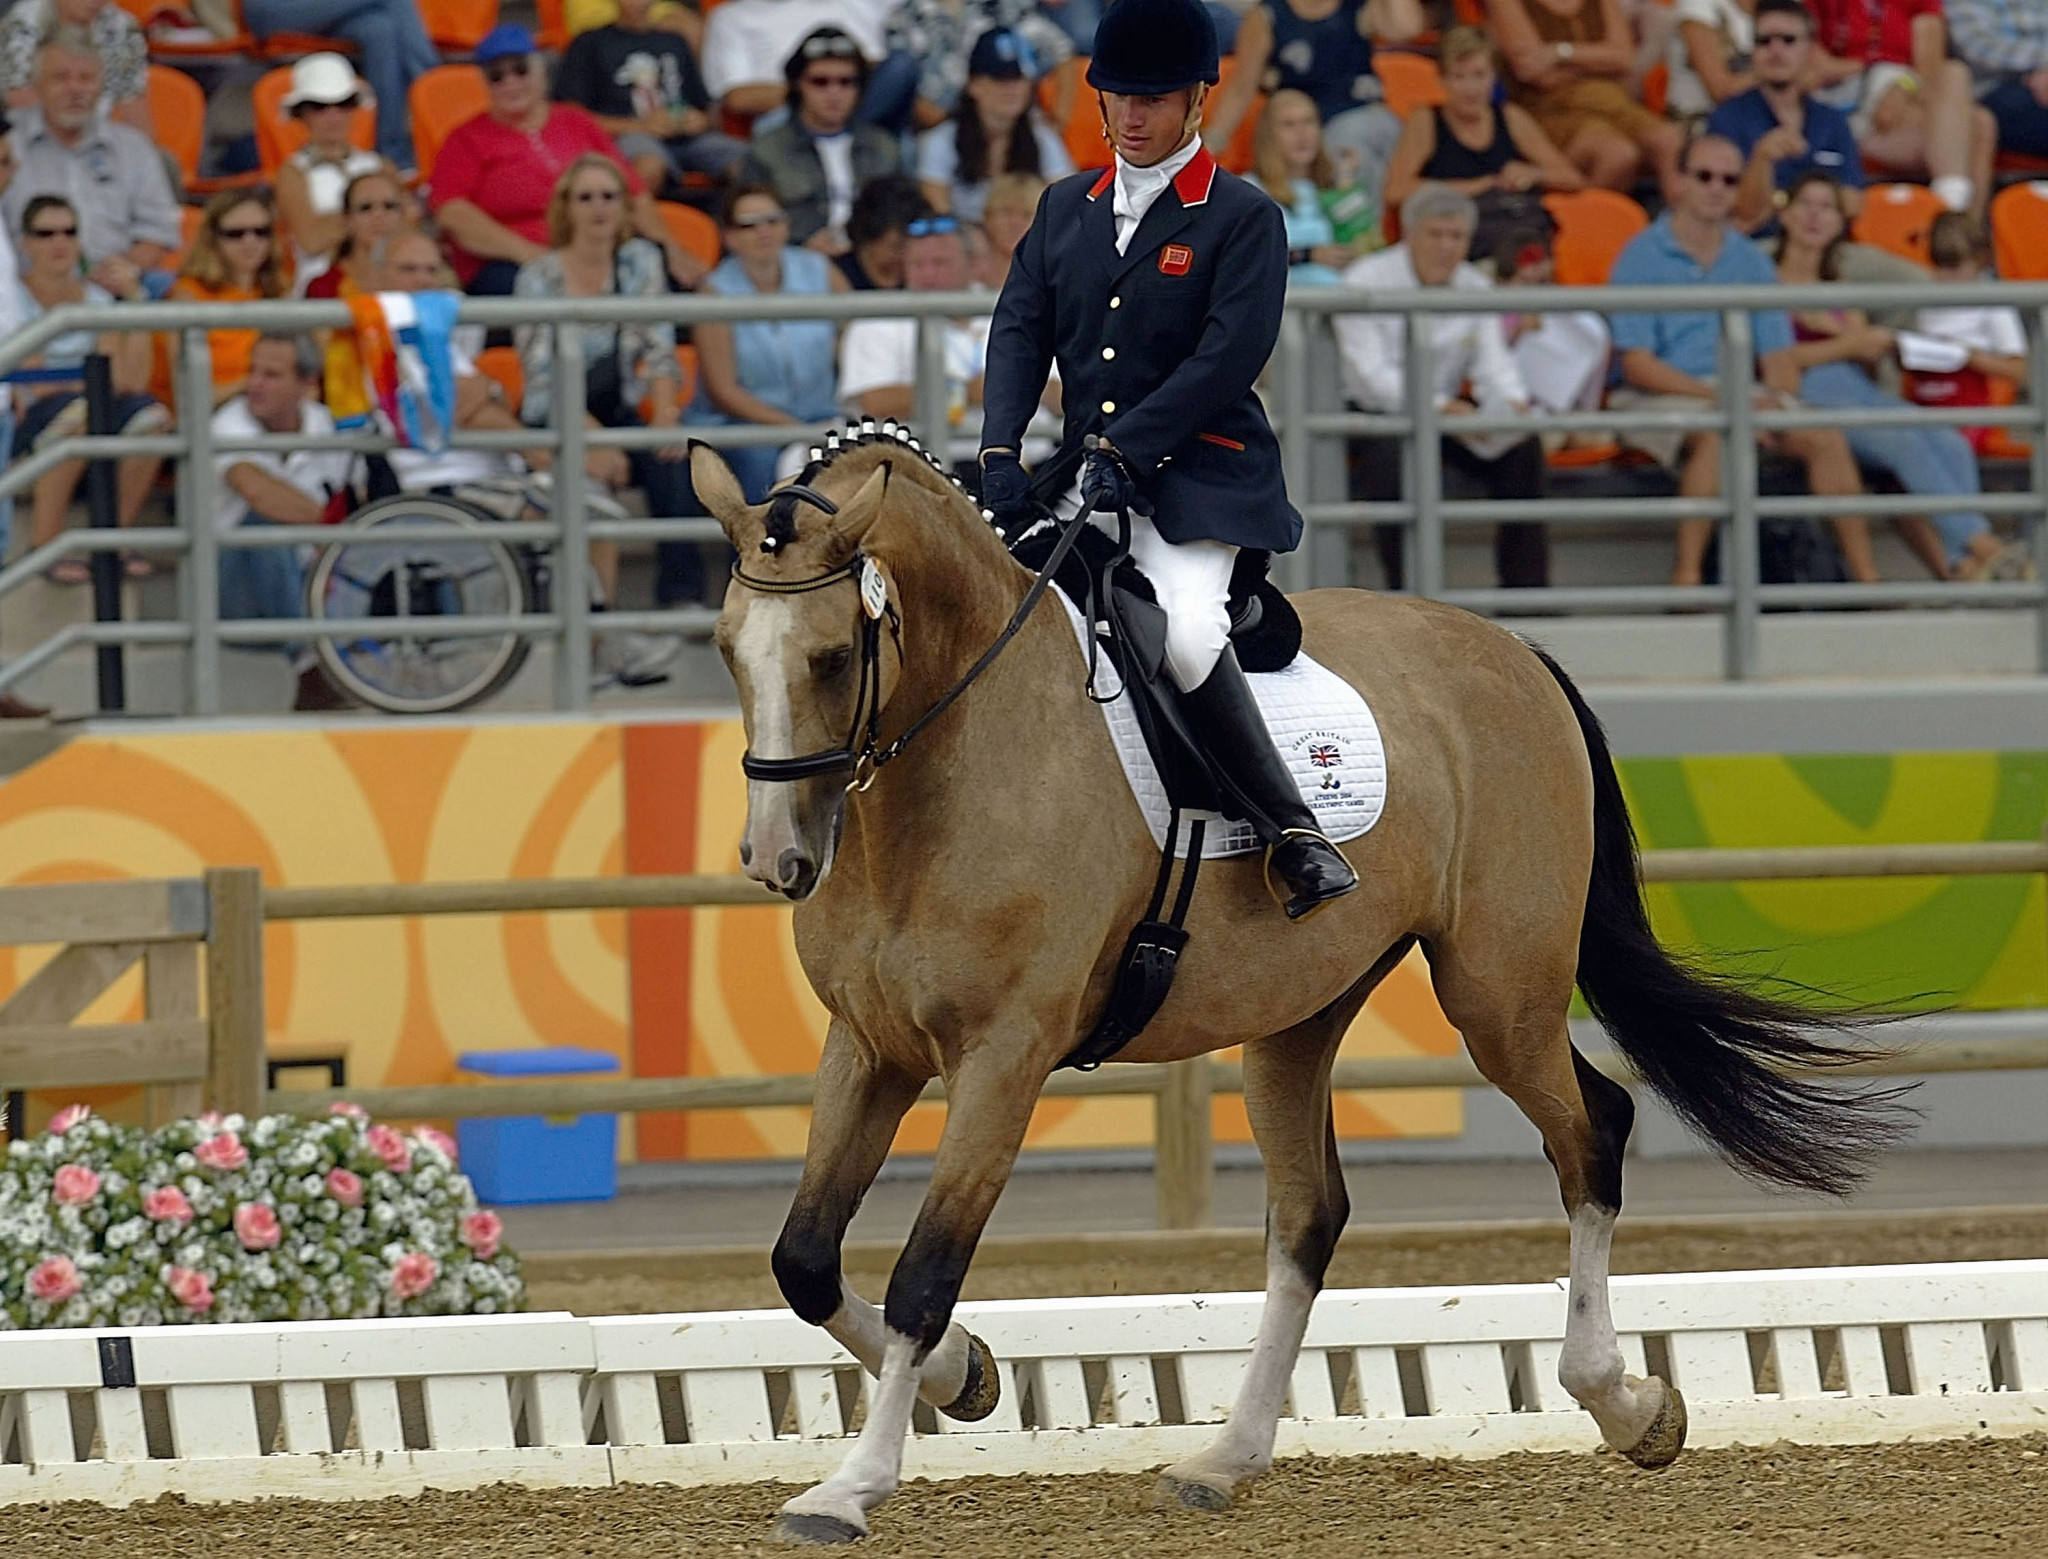 Pearson's Athens 2004 Para-equestrian triple gold partner dies